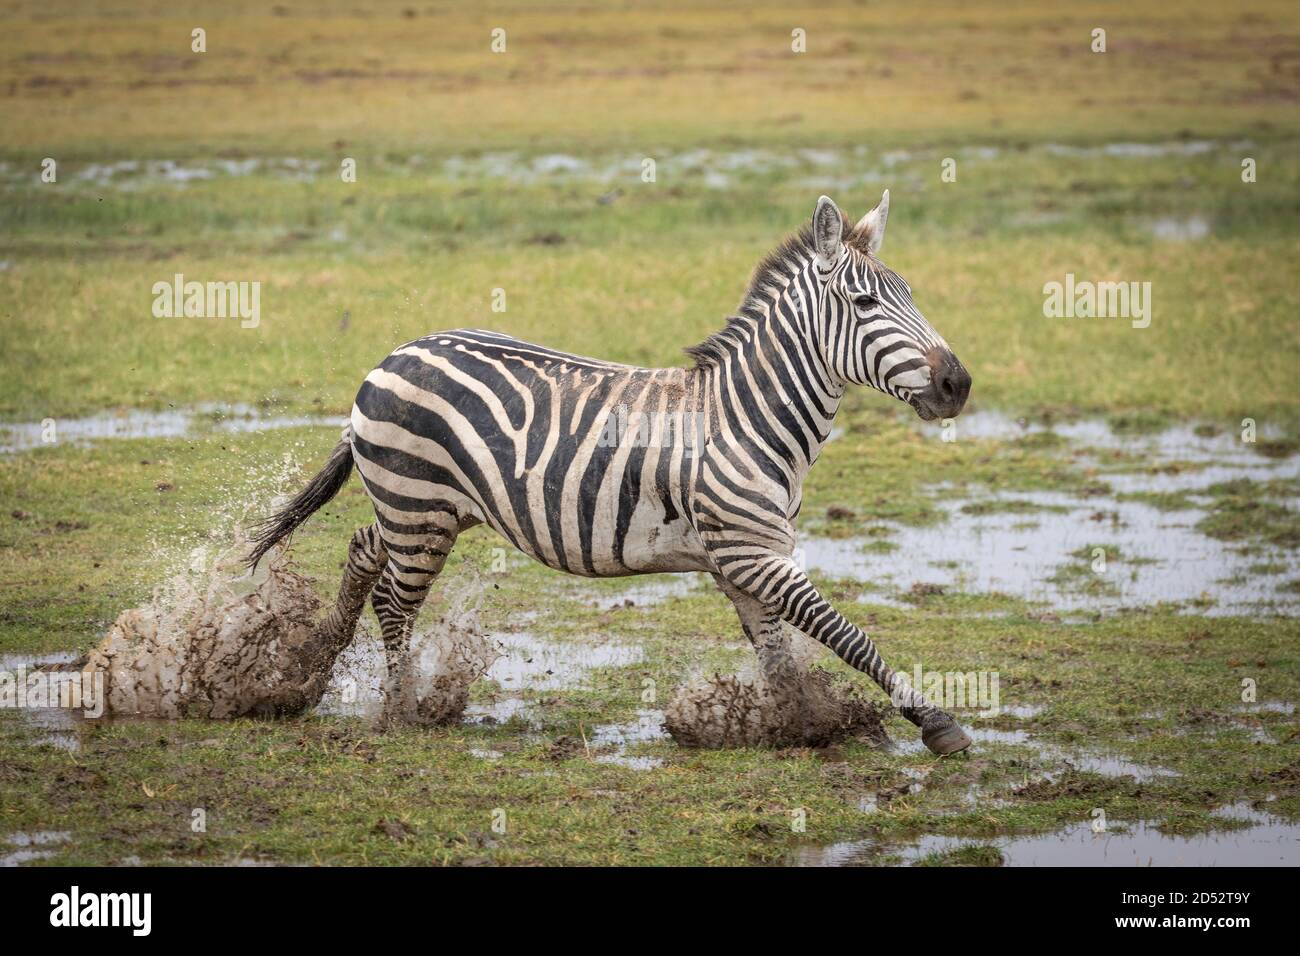 Adult zebra running in mud in Amboseli National Park in Kenya Stock Photo